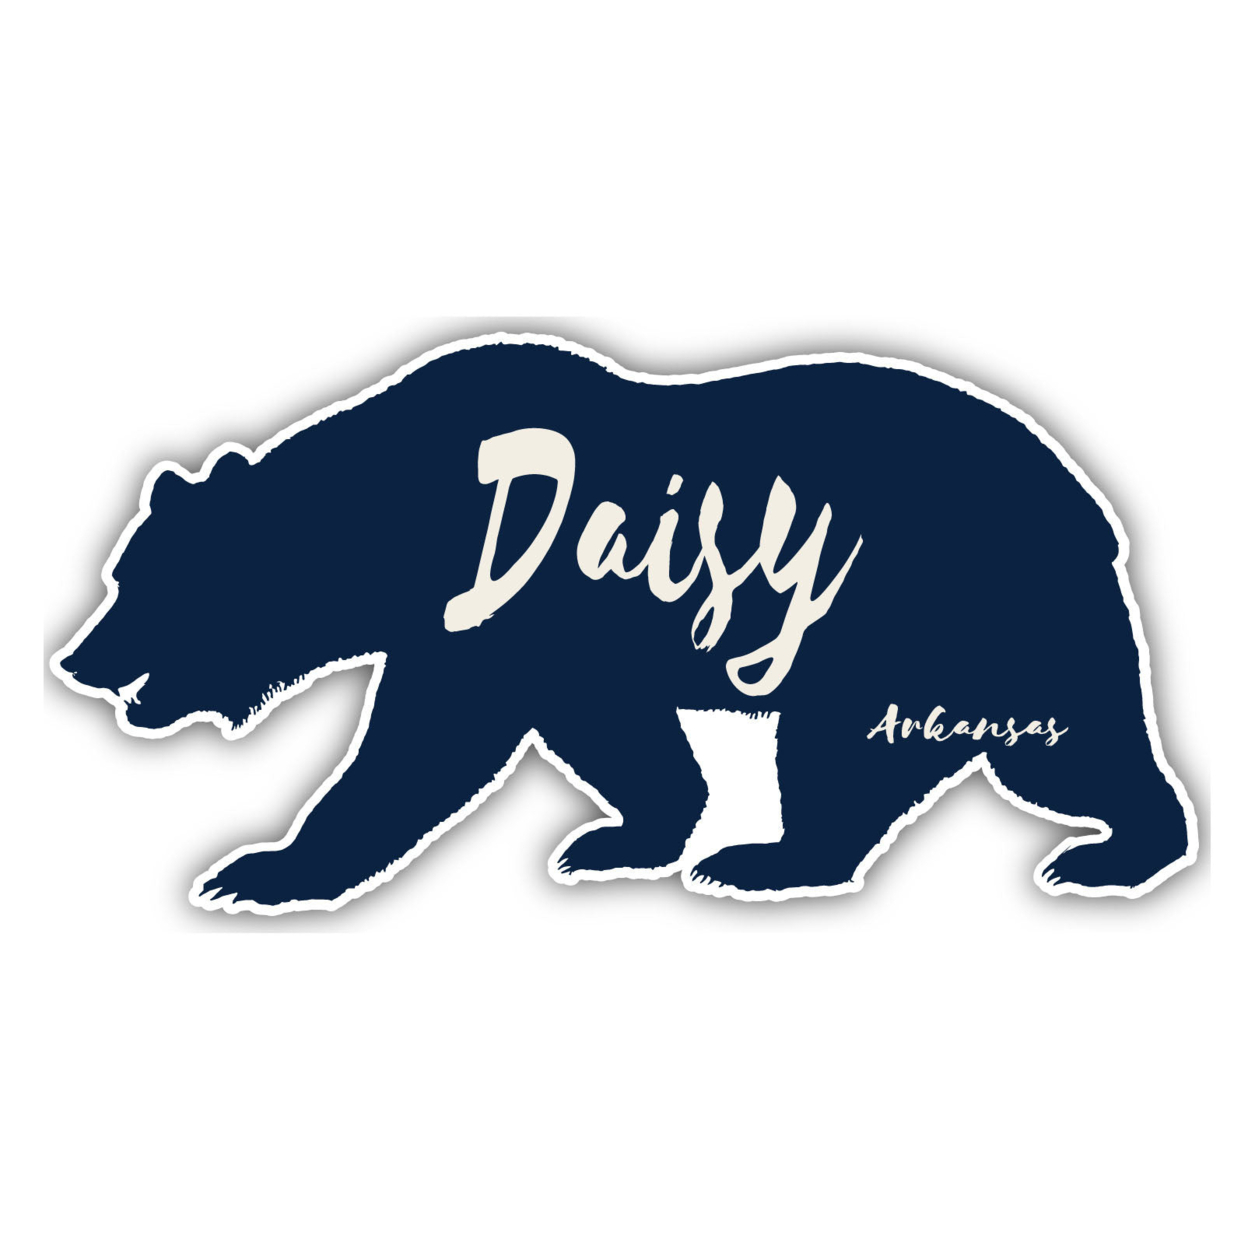 Daisy Arkansas Souvenir Decorative Stickers (Choose Theme And Size) - 4-Pack, 2-Inch, Bear